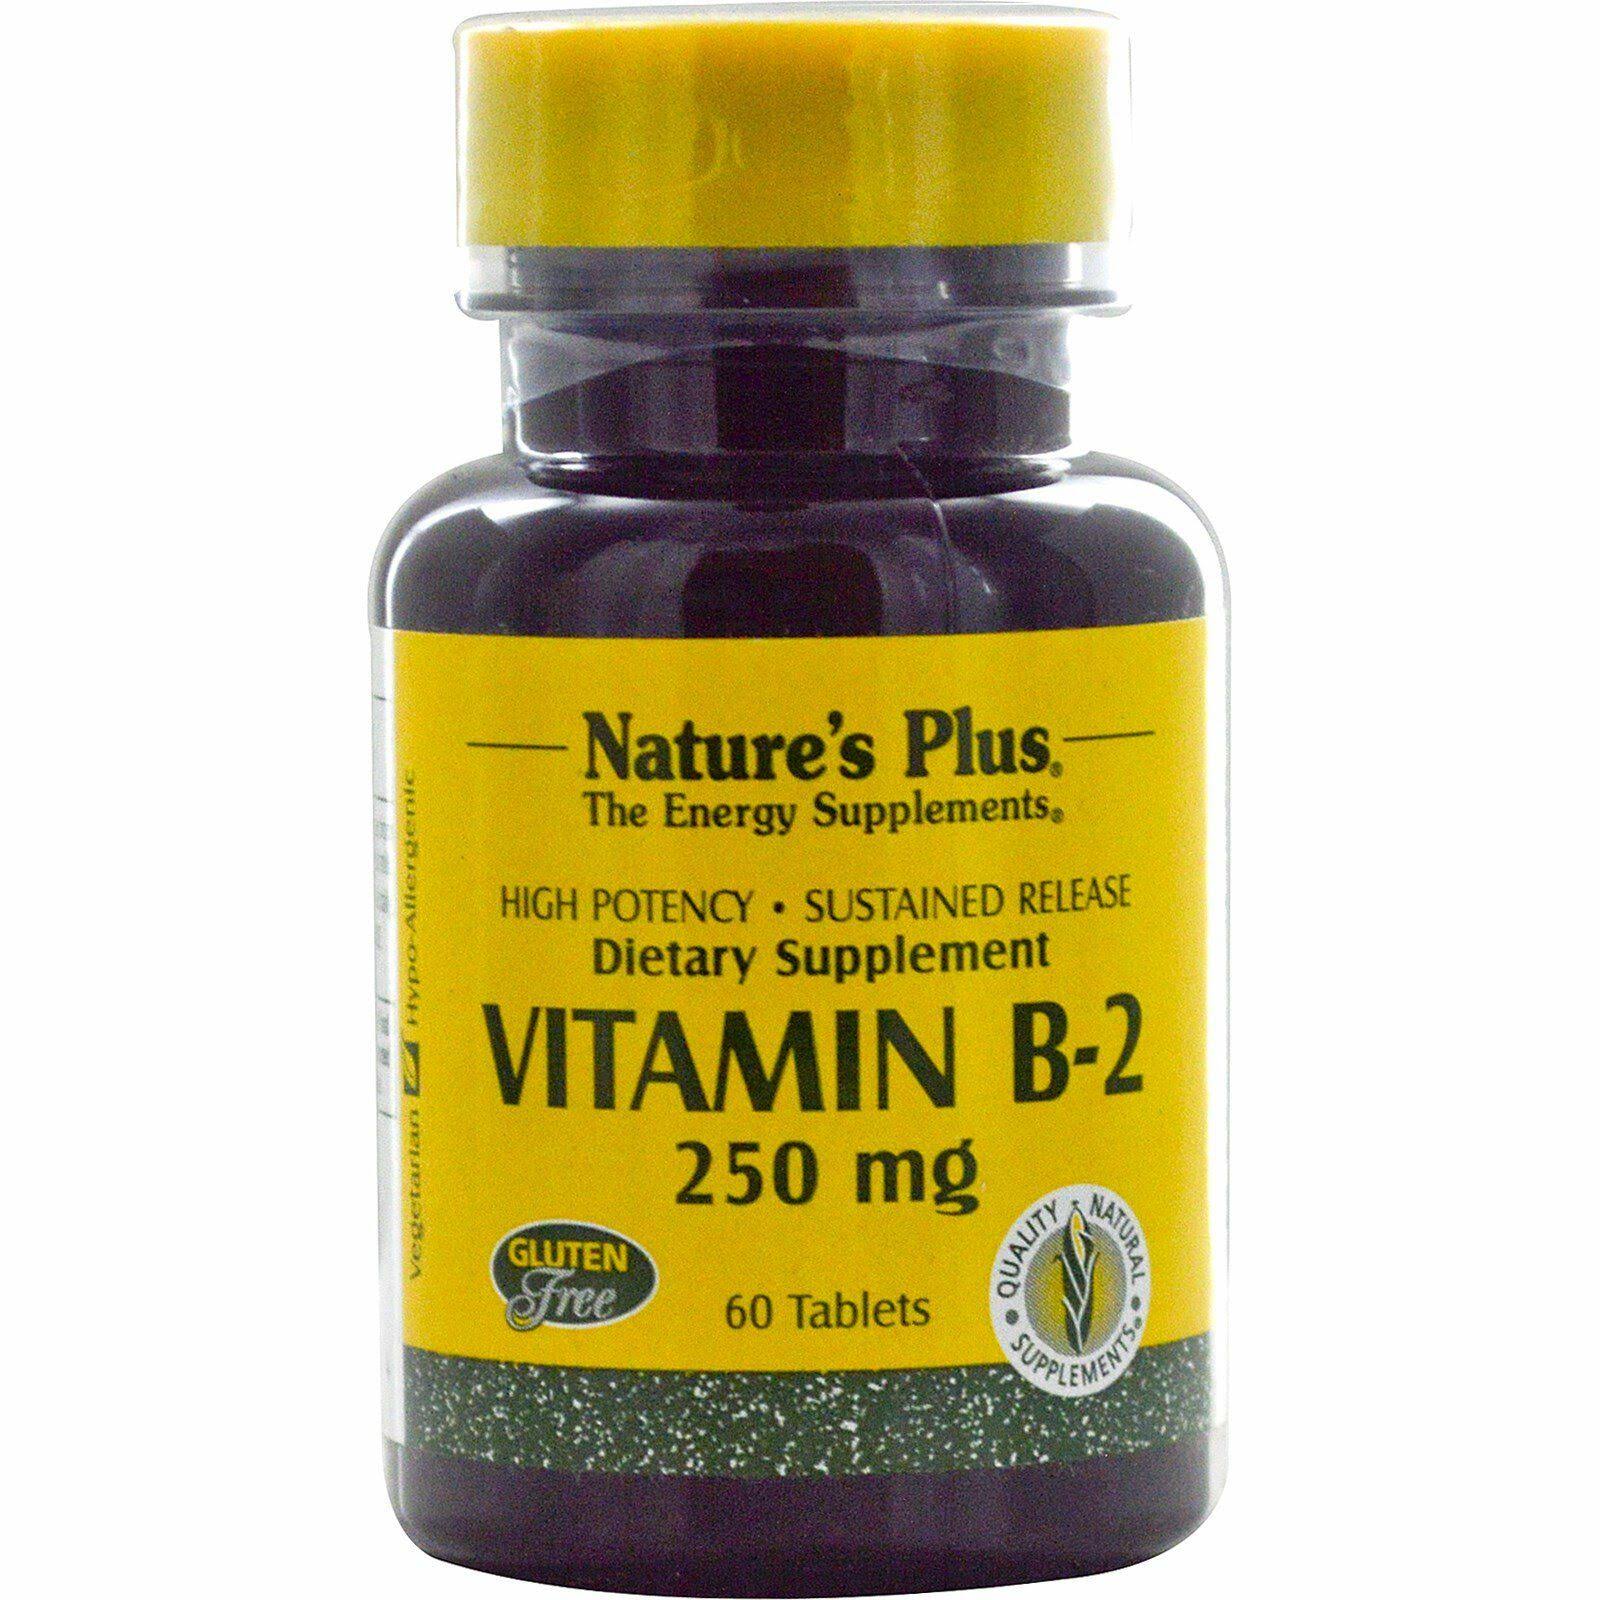 Nature's Plus Vitamin B-2 - 250mg, 60 Tablets